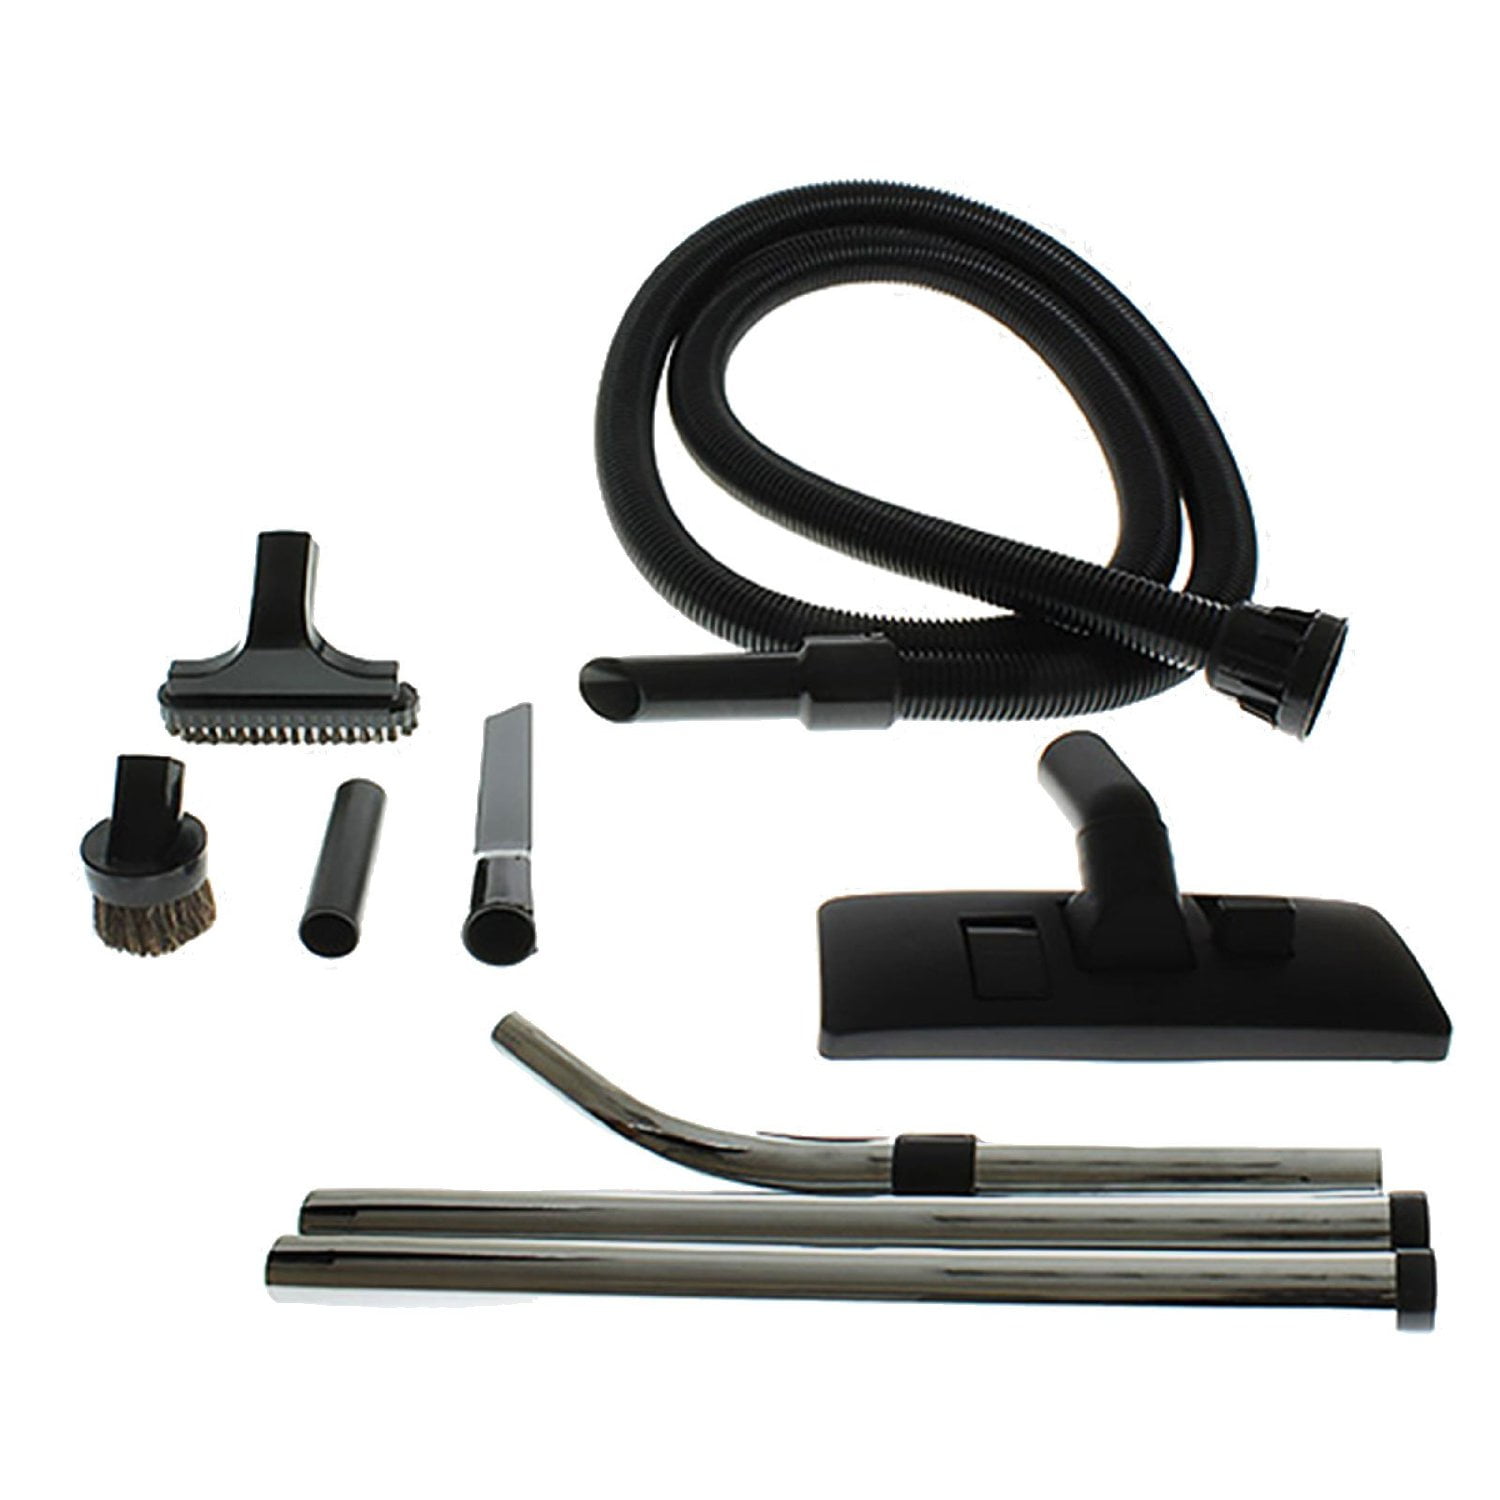 For Henry Numatic Vacuum Cleaner Full Hose Tool Kit 2.5 Metres 